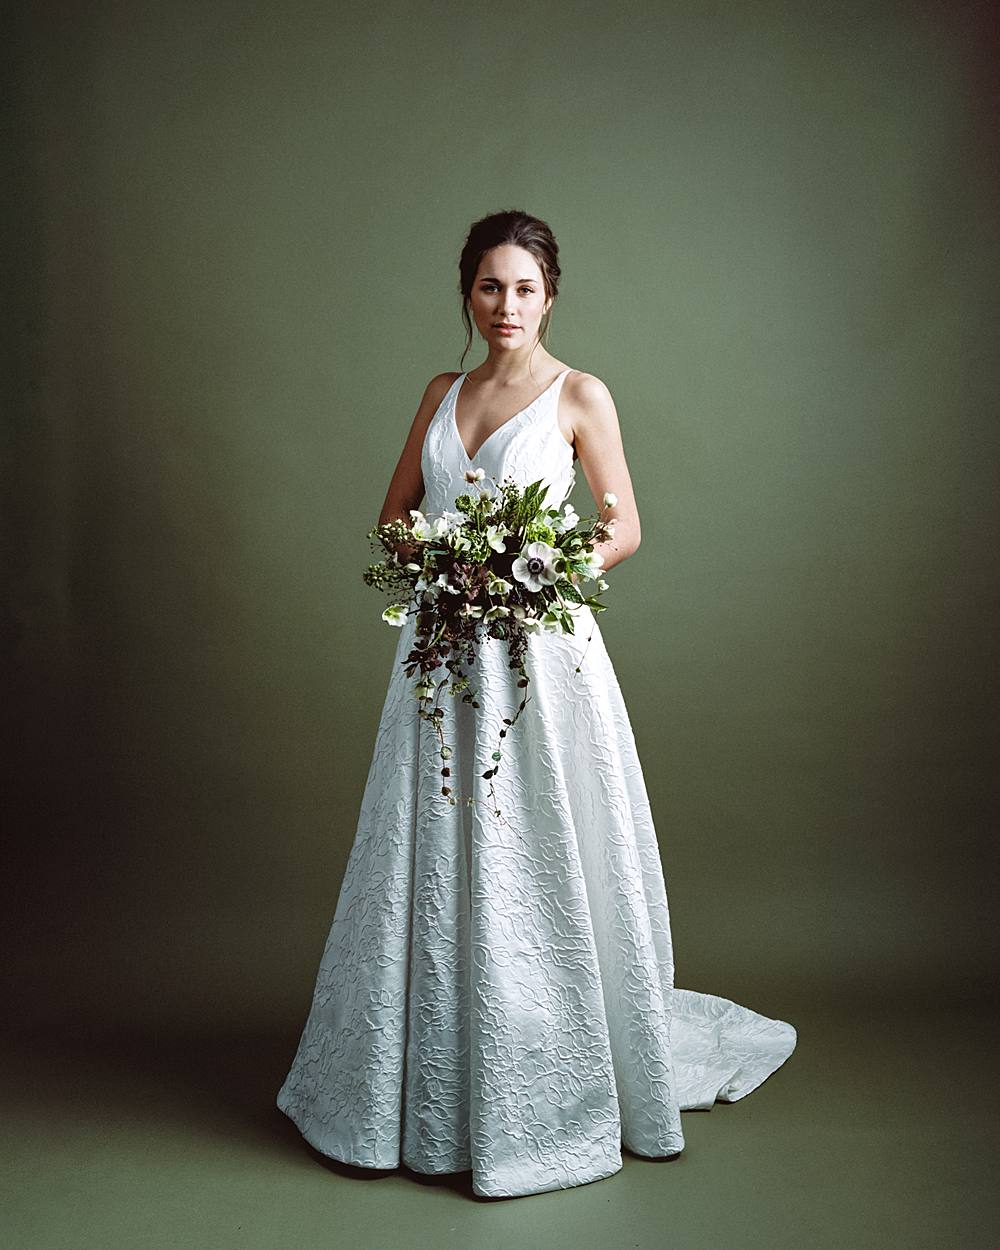 2002 charleston studio bridal portrait green seamless florals kodak portra 160 film strobes 00022_web